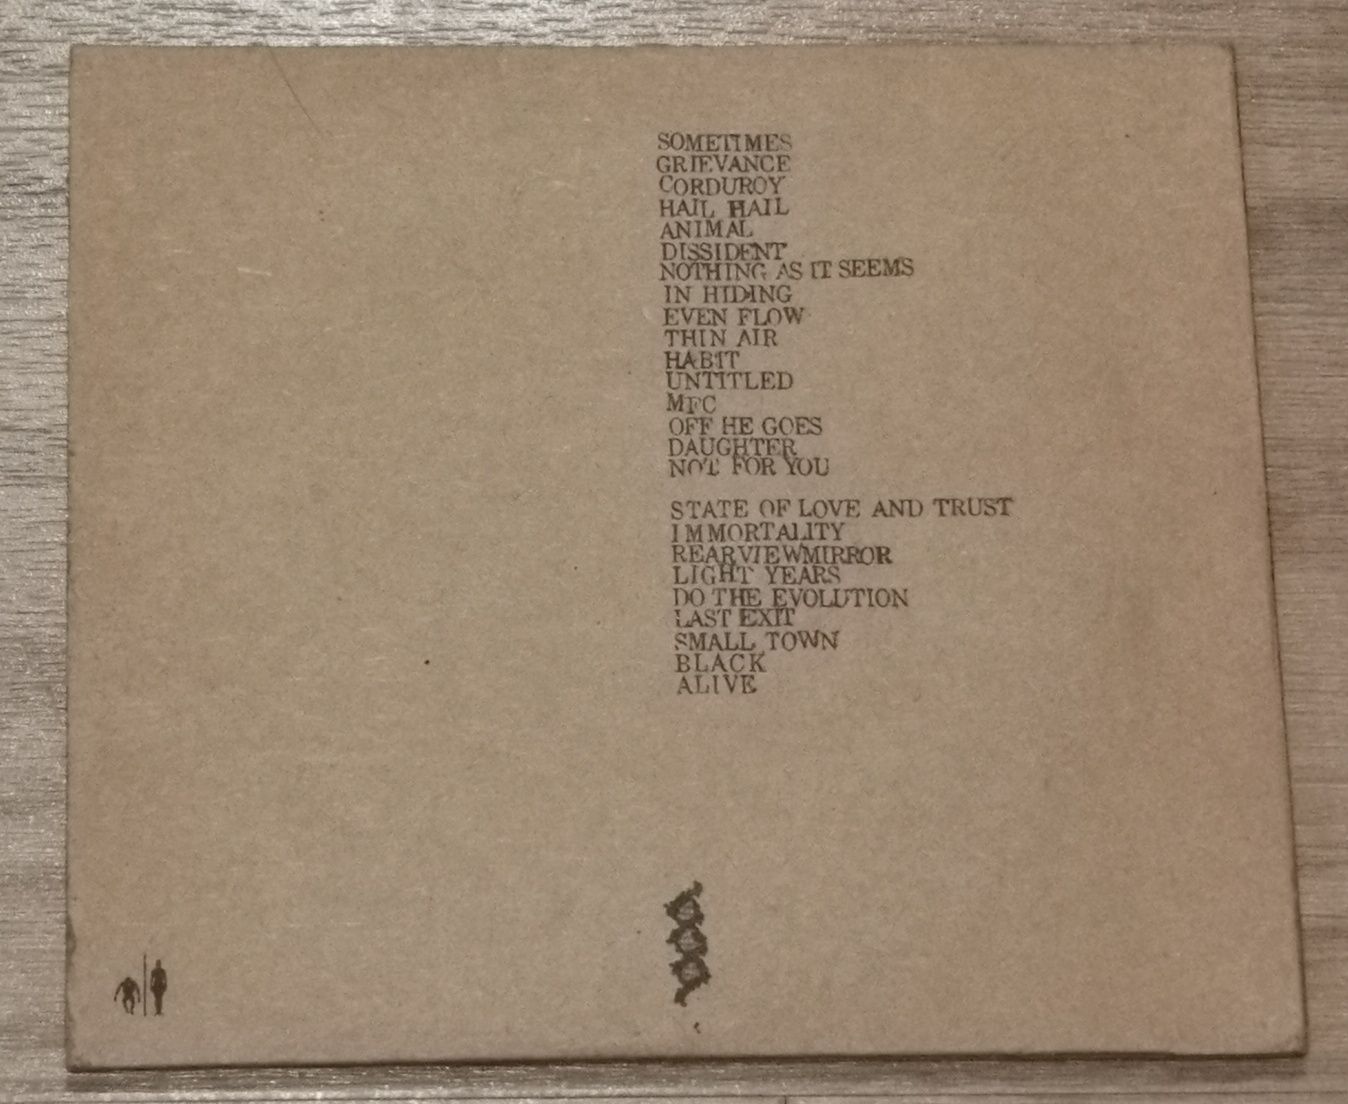 Pearl Jam - Londres 2000 - CD duplo